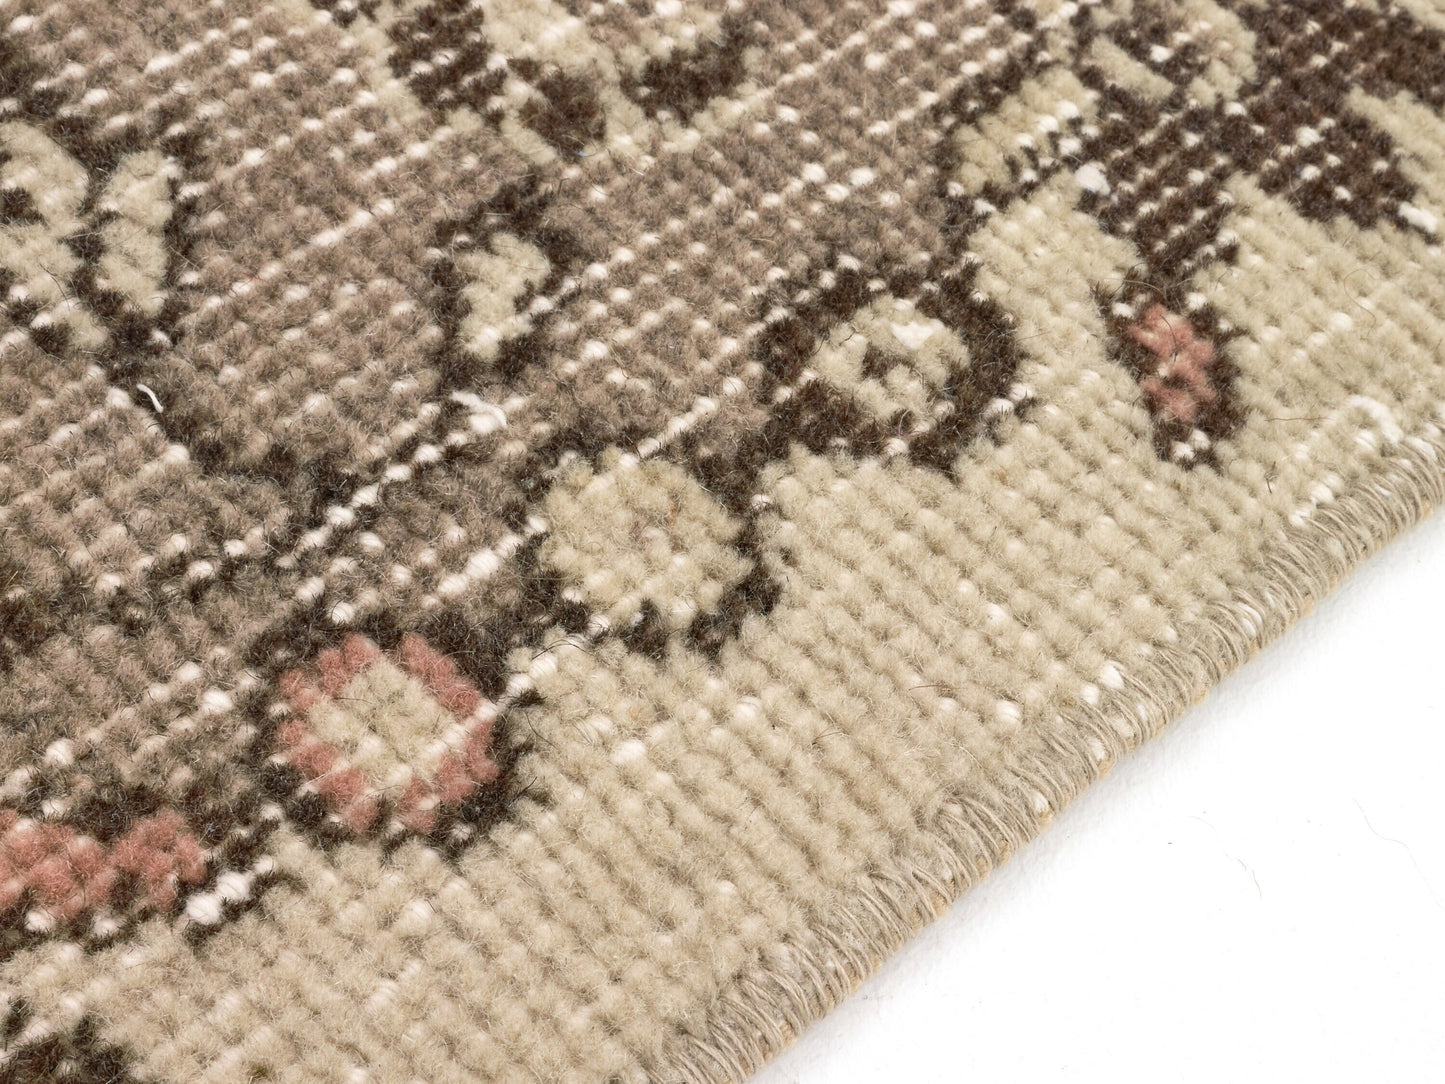 Rug 4x7, Carpet rug, Area rug, Turkish Rug, Vintage rug, Decorative Oushak Rug, Handmade rug, Bedroom rug, Faded rug, Entryway rug, 9675